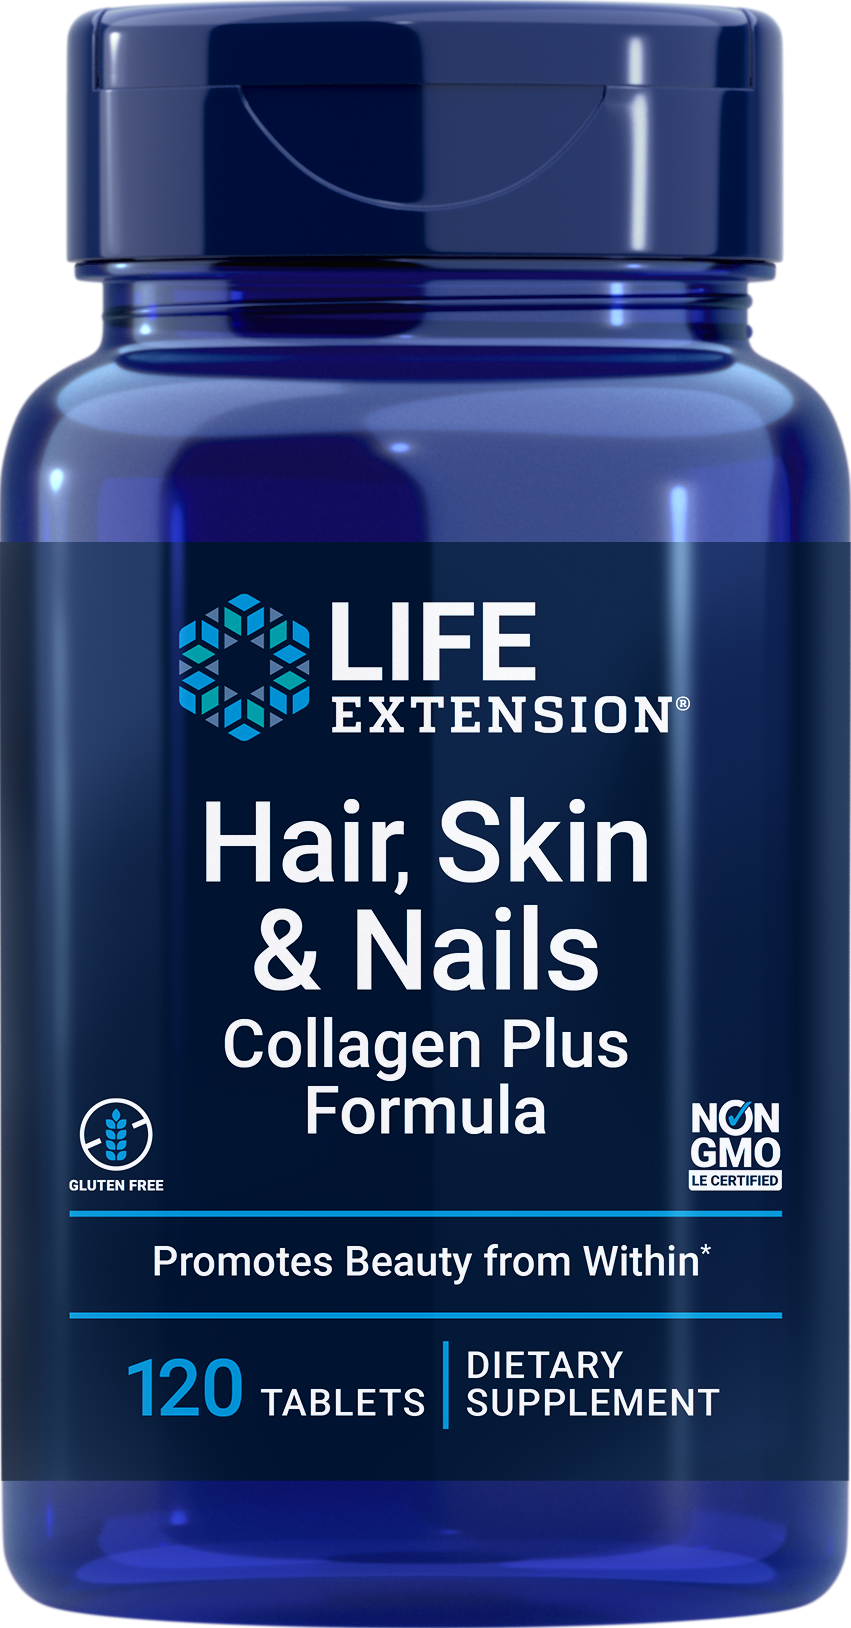 Hair, Skin & Nails Collagen Plus Formula